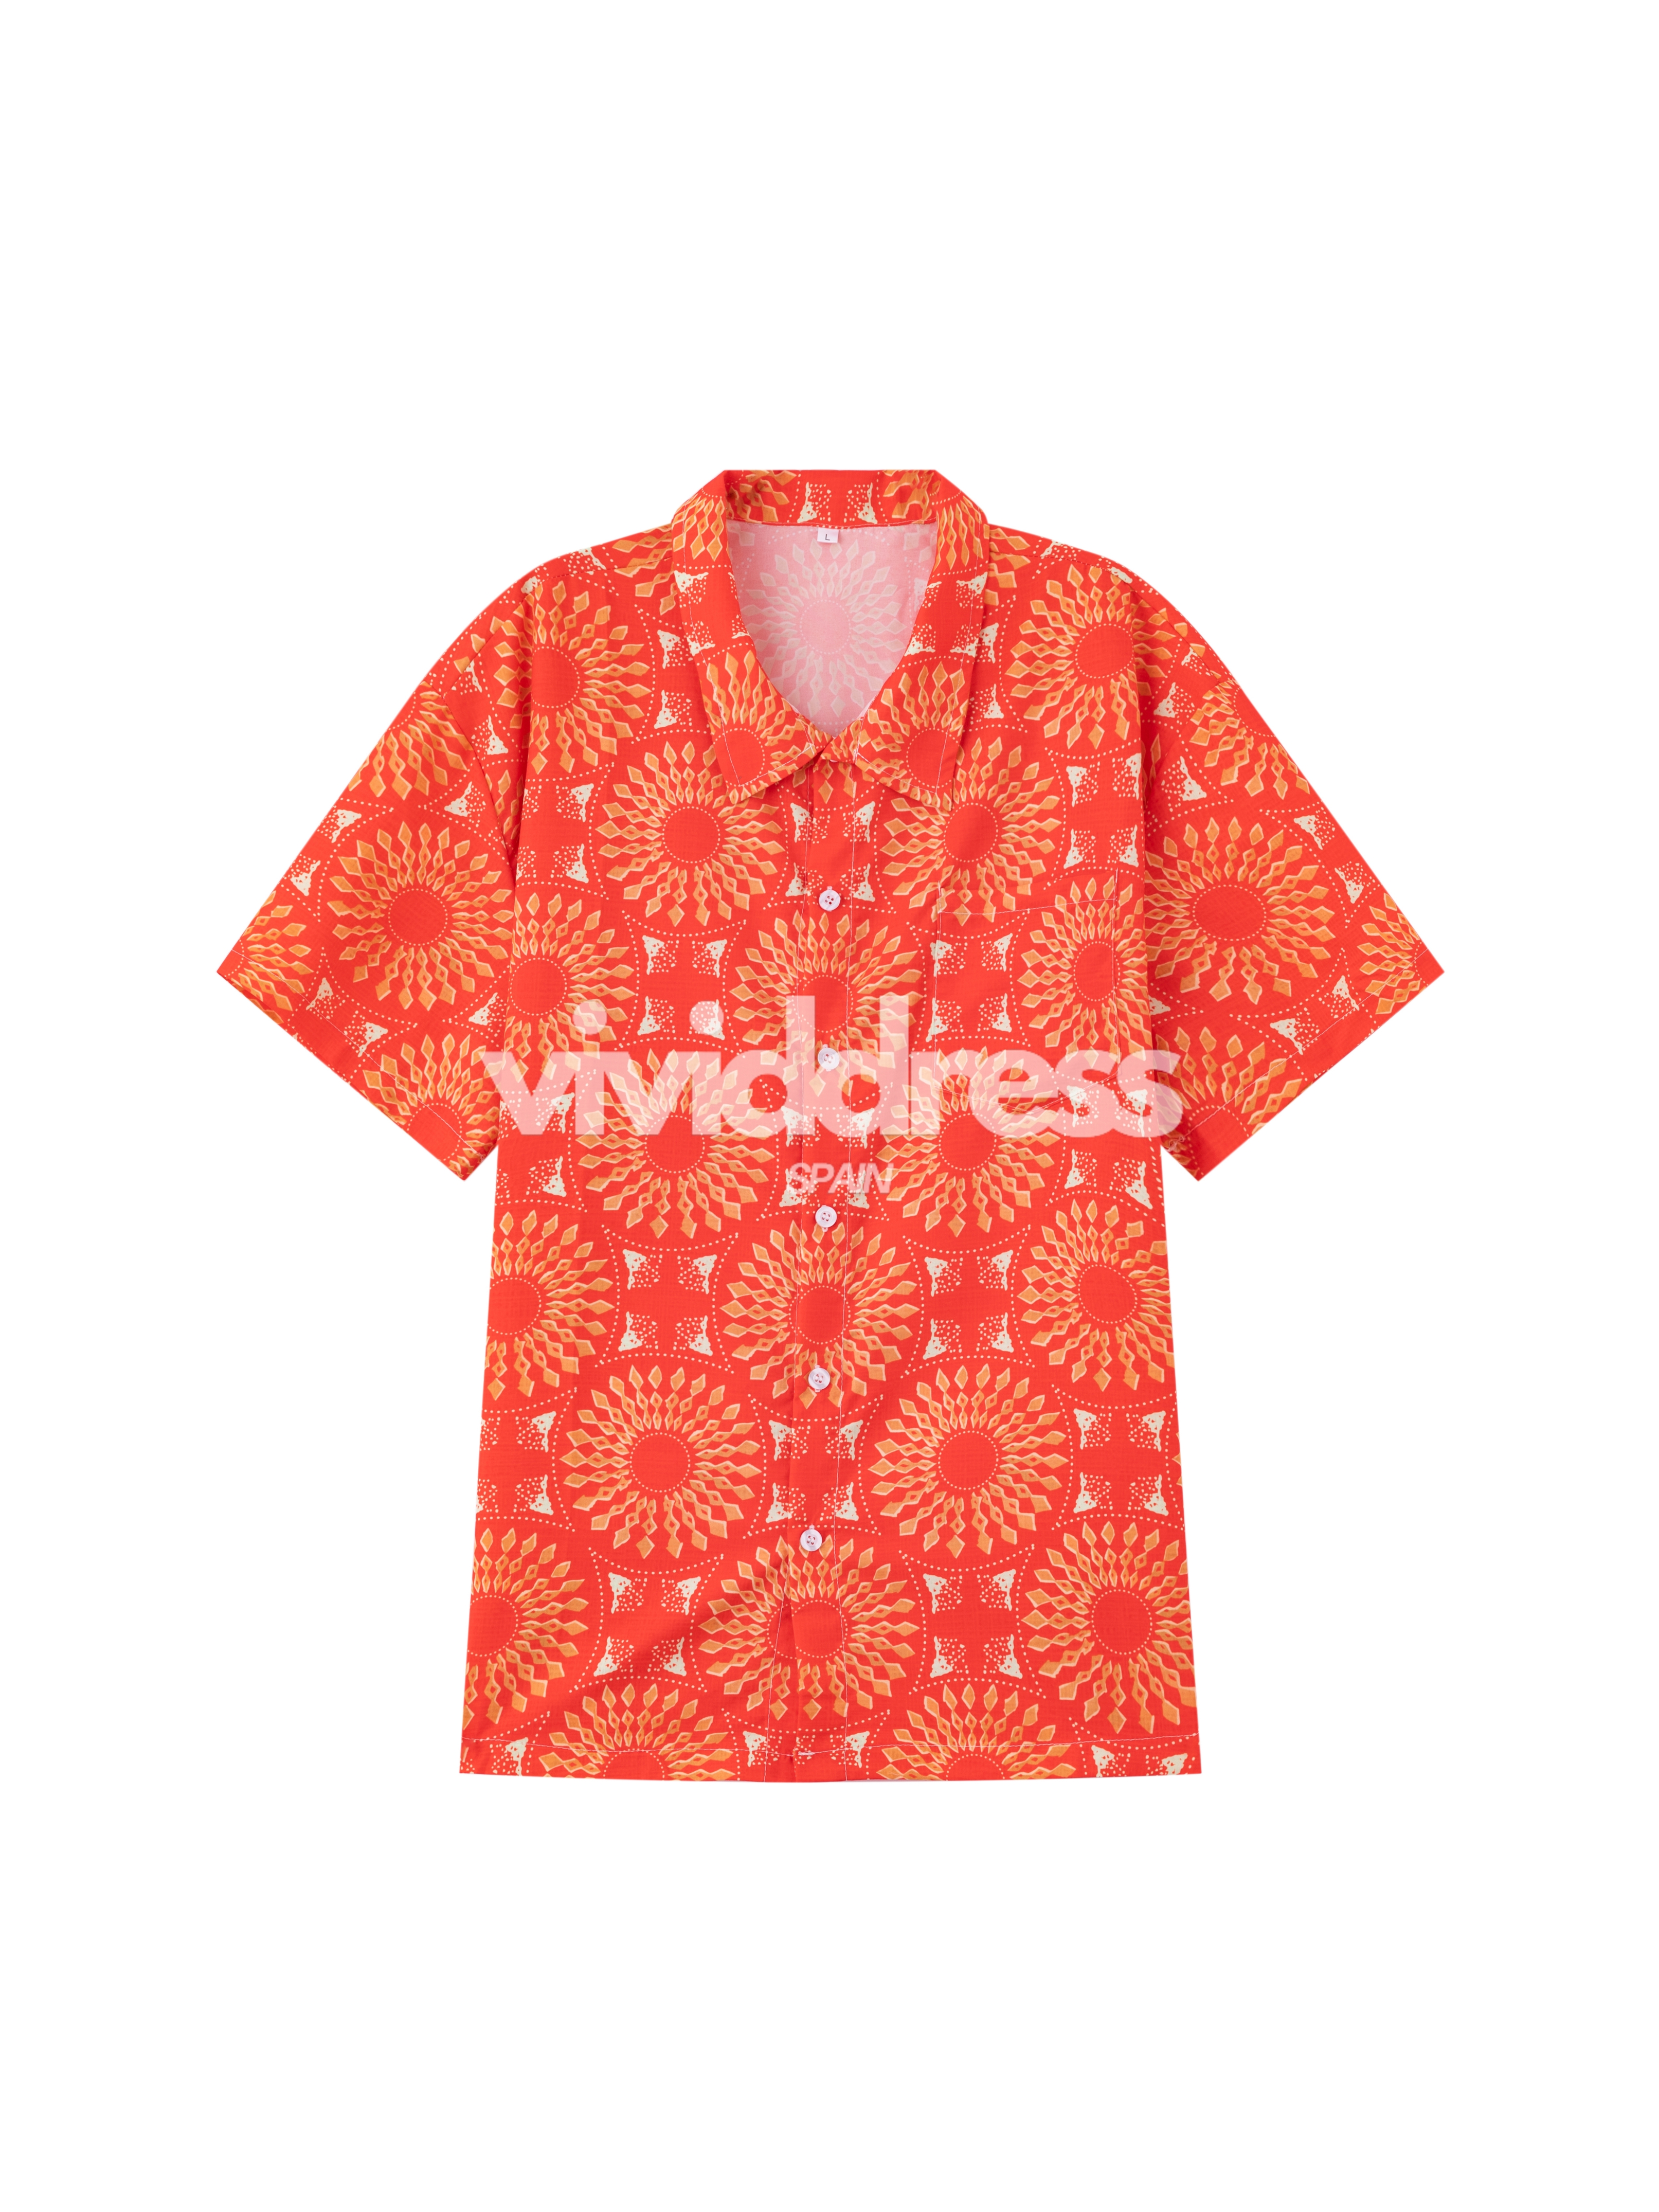 Men's Floral Print Orange Beach Summer Holiday Short Sleeve Shirt